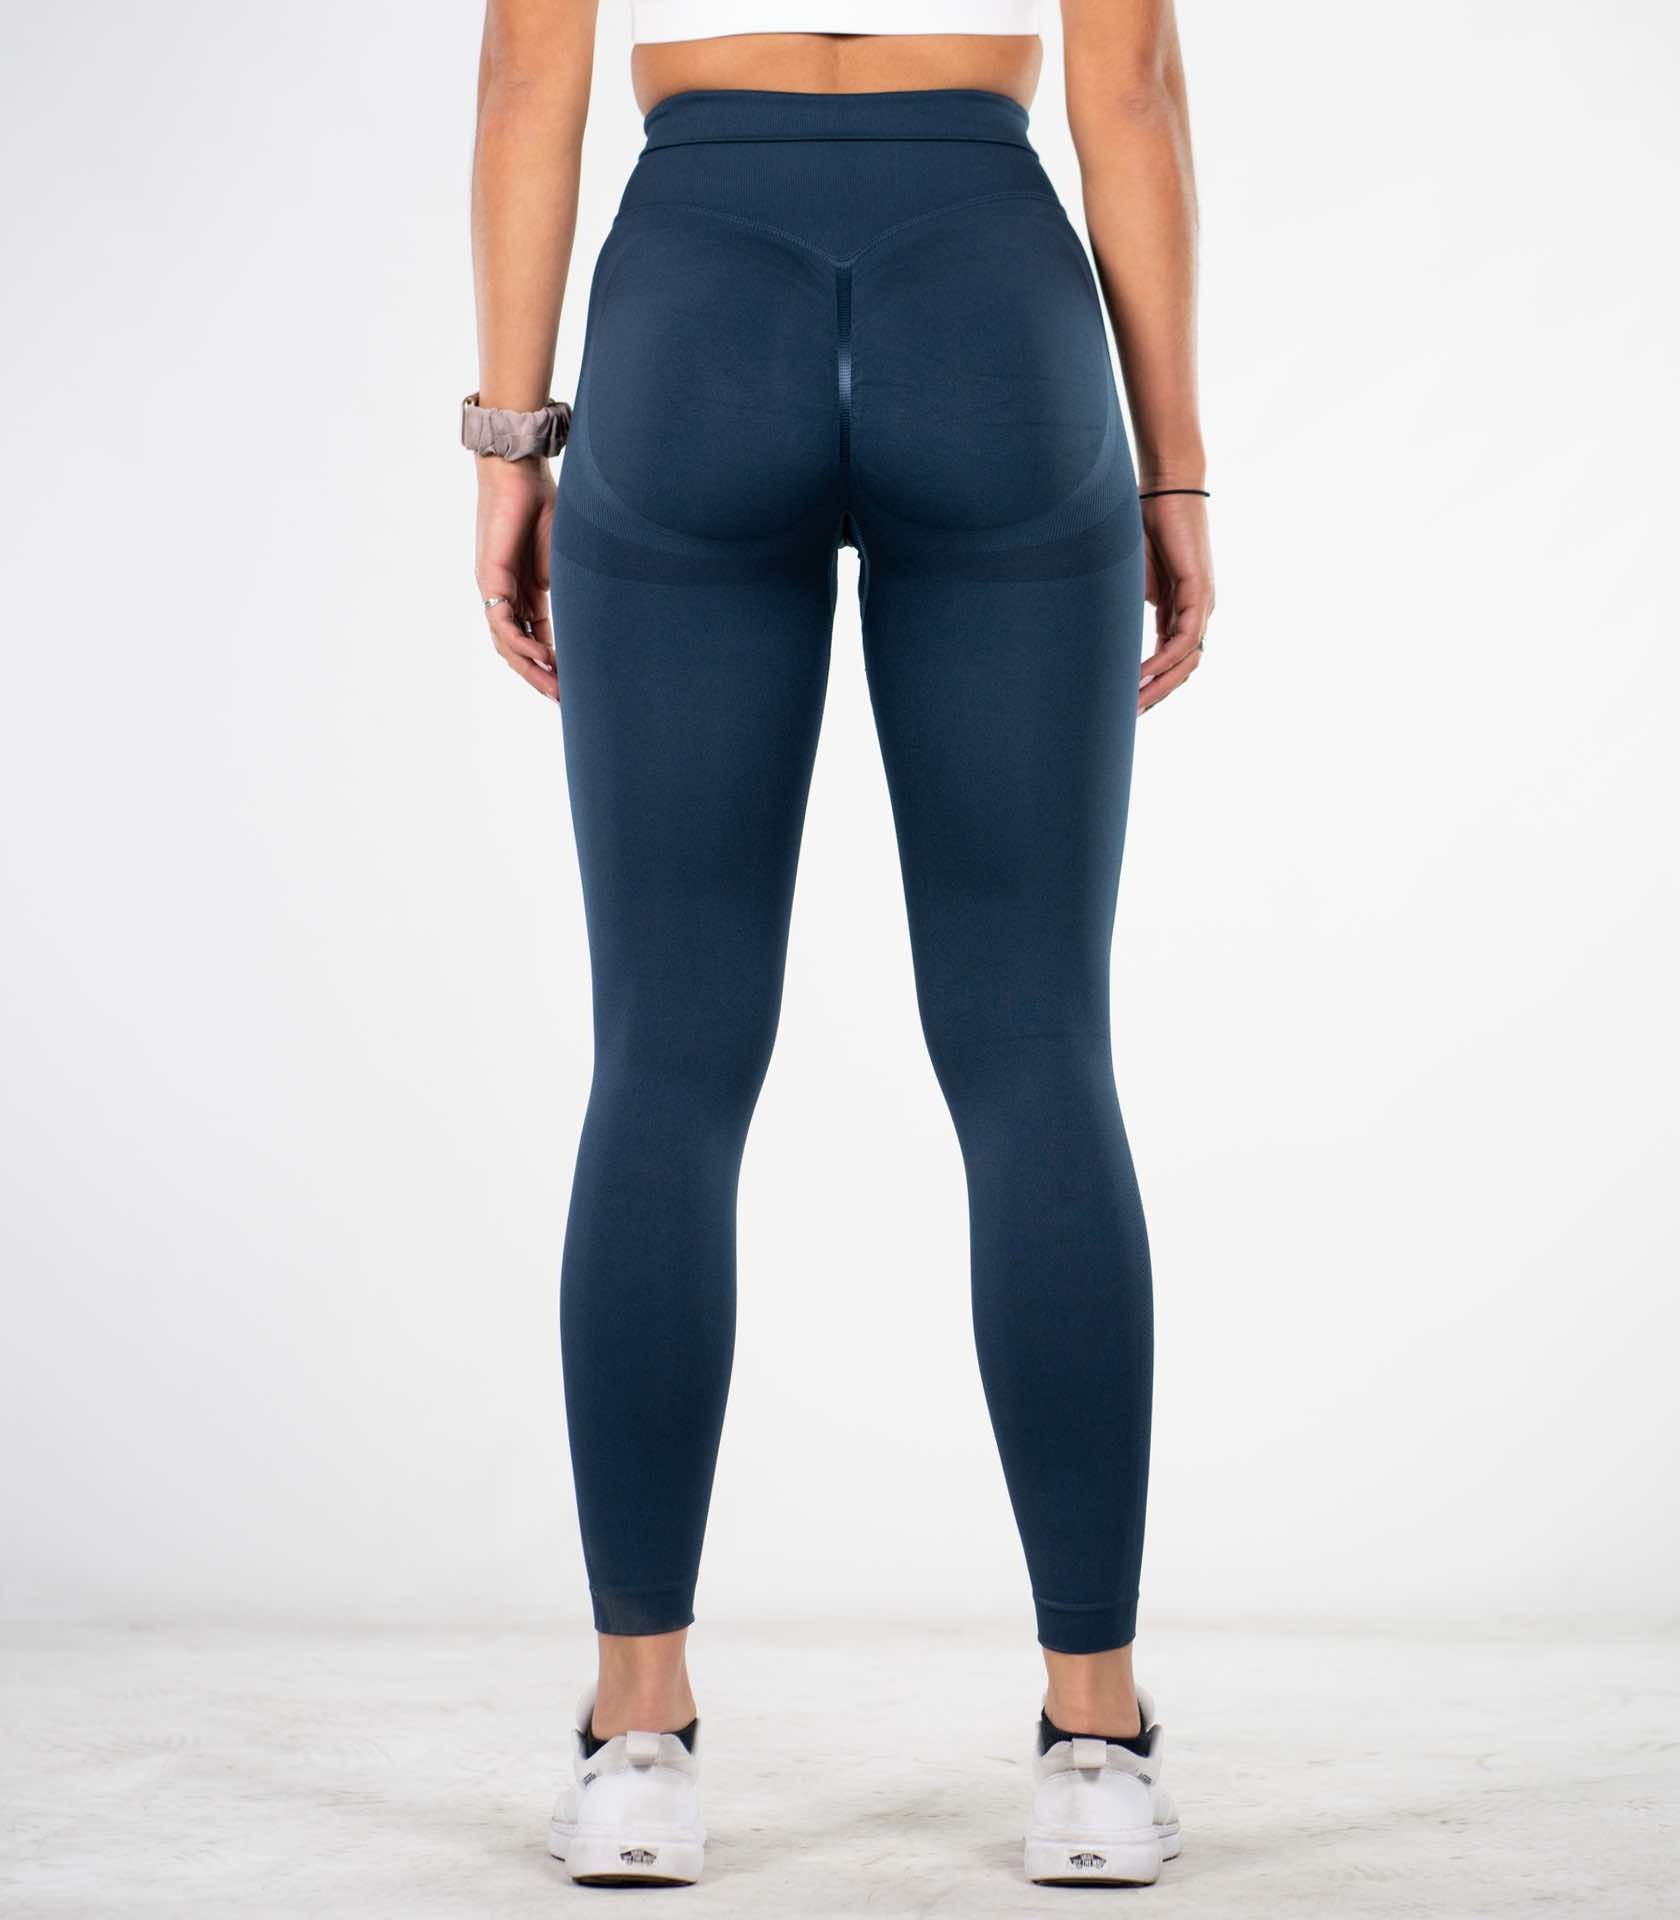 Gaia Yoga Pants - Navy Blue, Women's Trousers & Yoga Pants